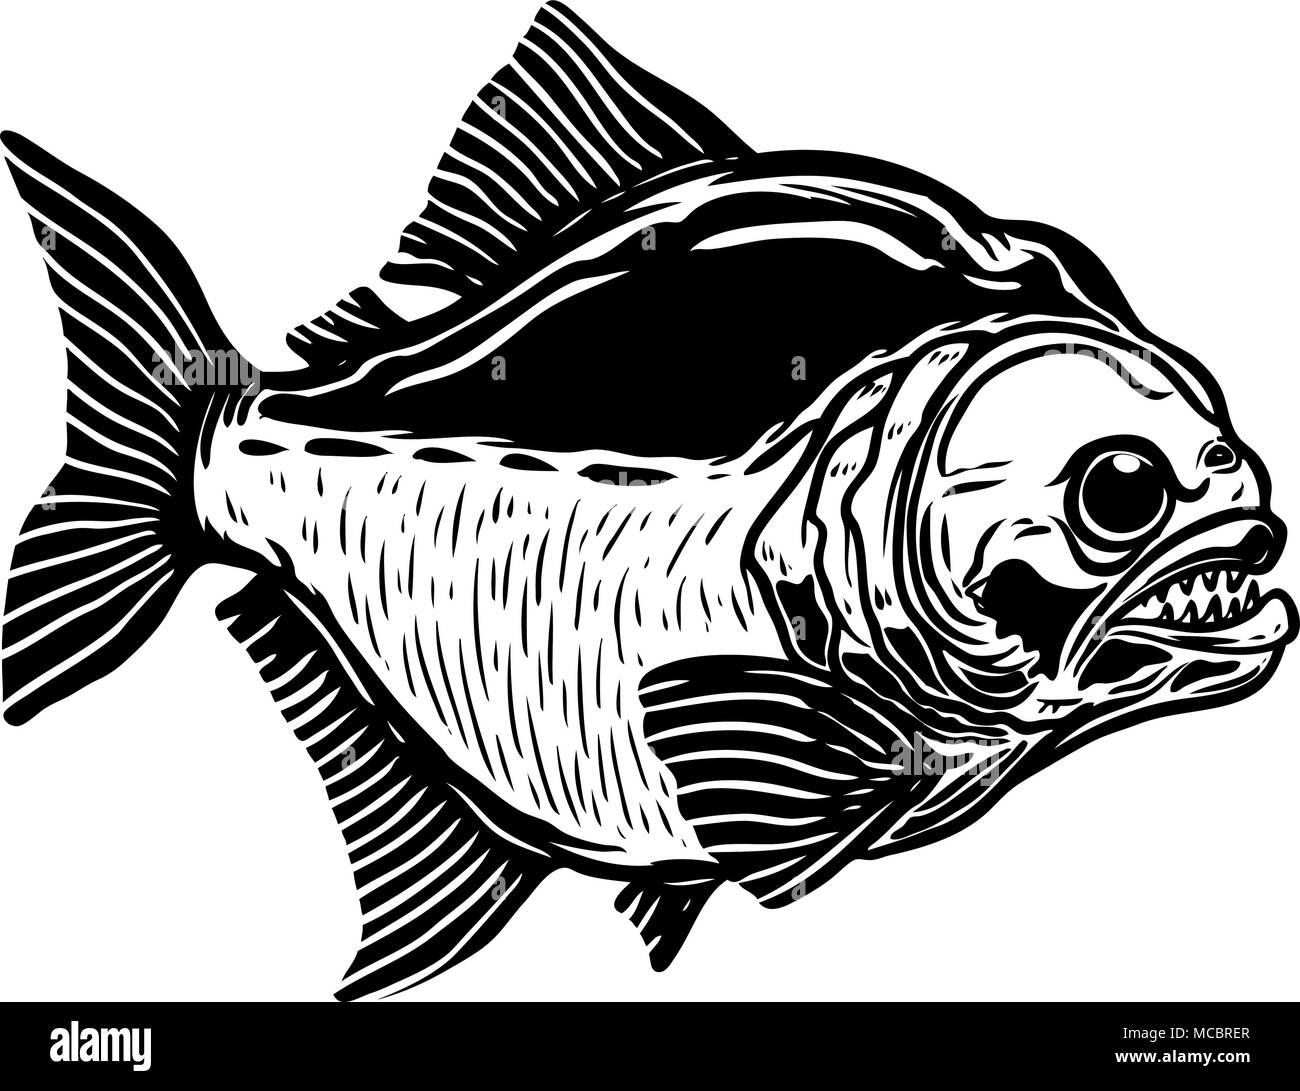 Piranha fish illustration isolated on white background. Design element for poster, t shirt, banner, emblem. Vector illustration Stock Vector